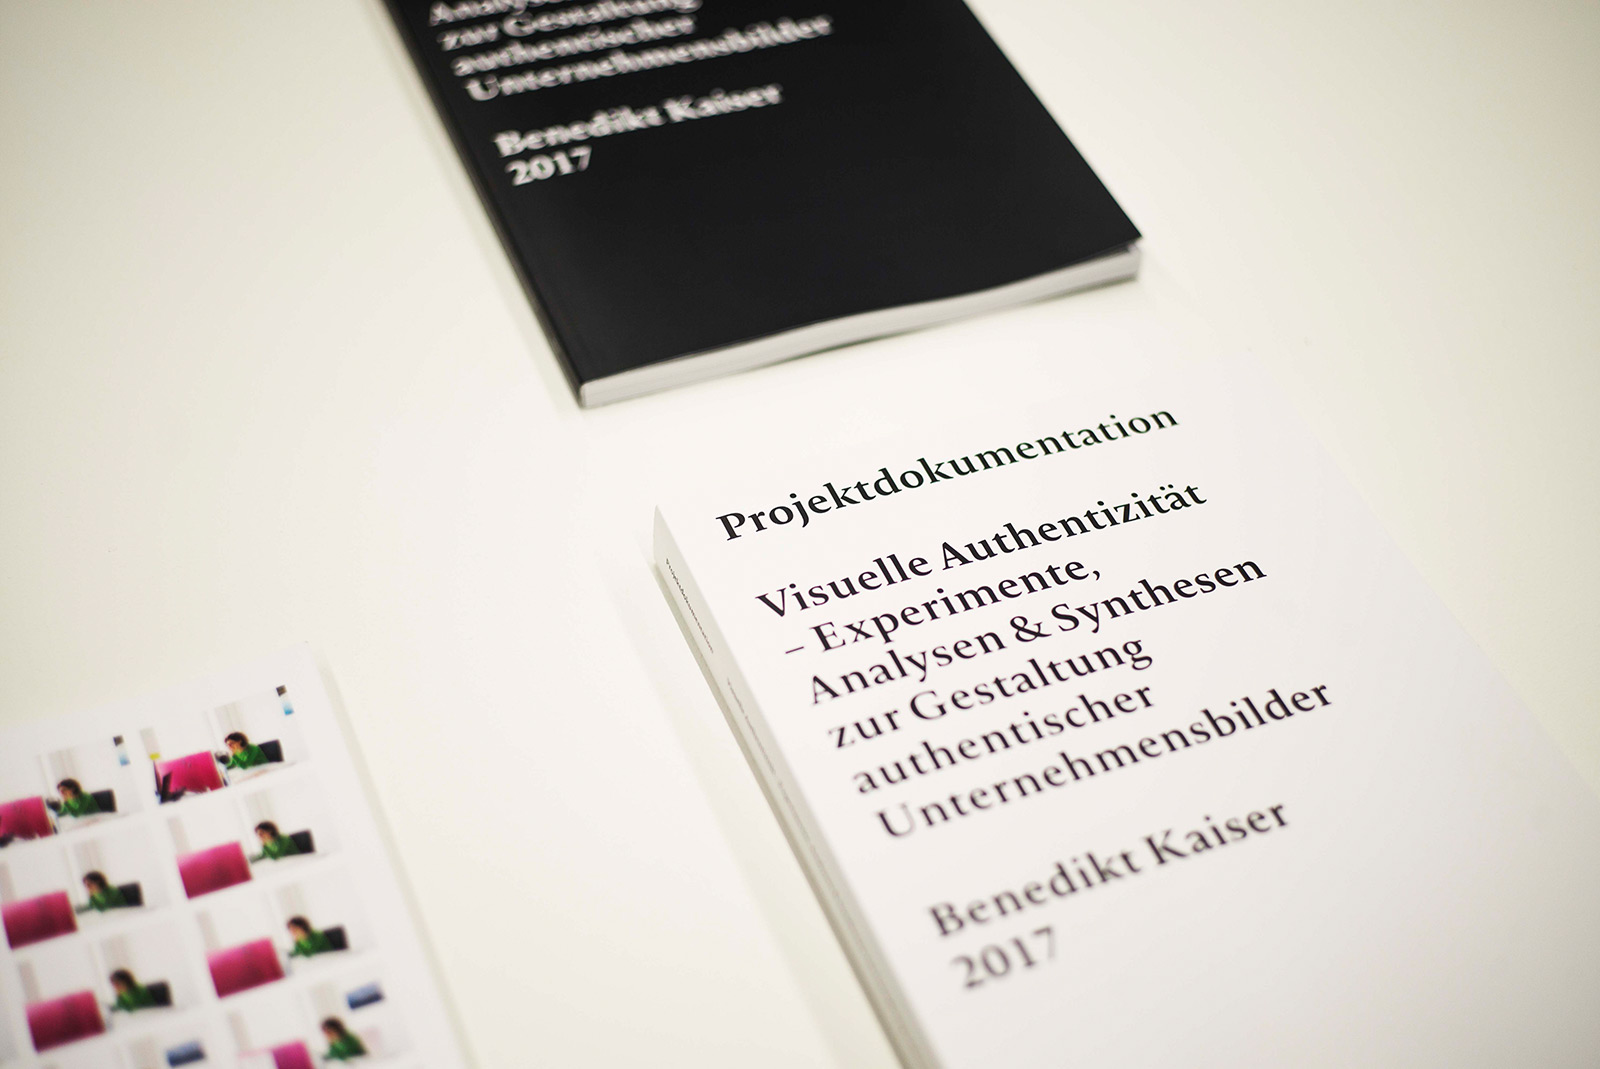 Benedikt Kaiser – Visual Authenticity